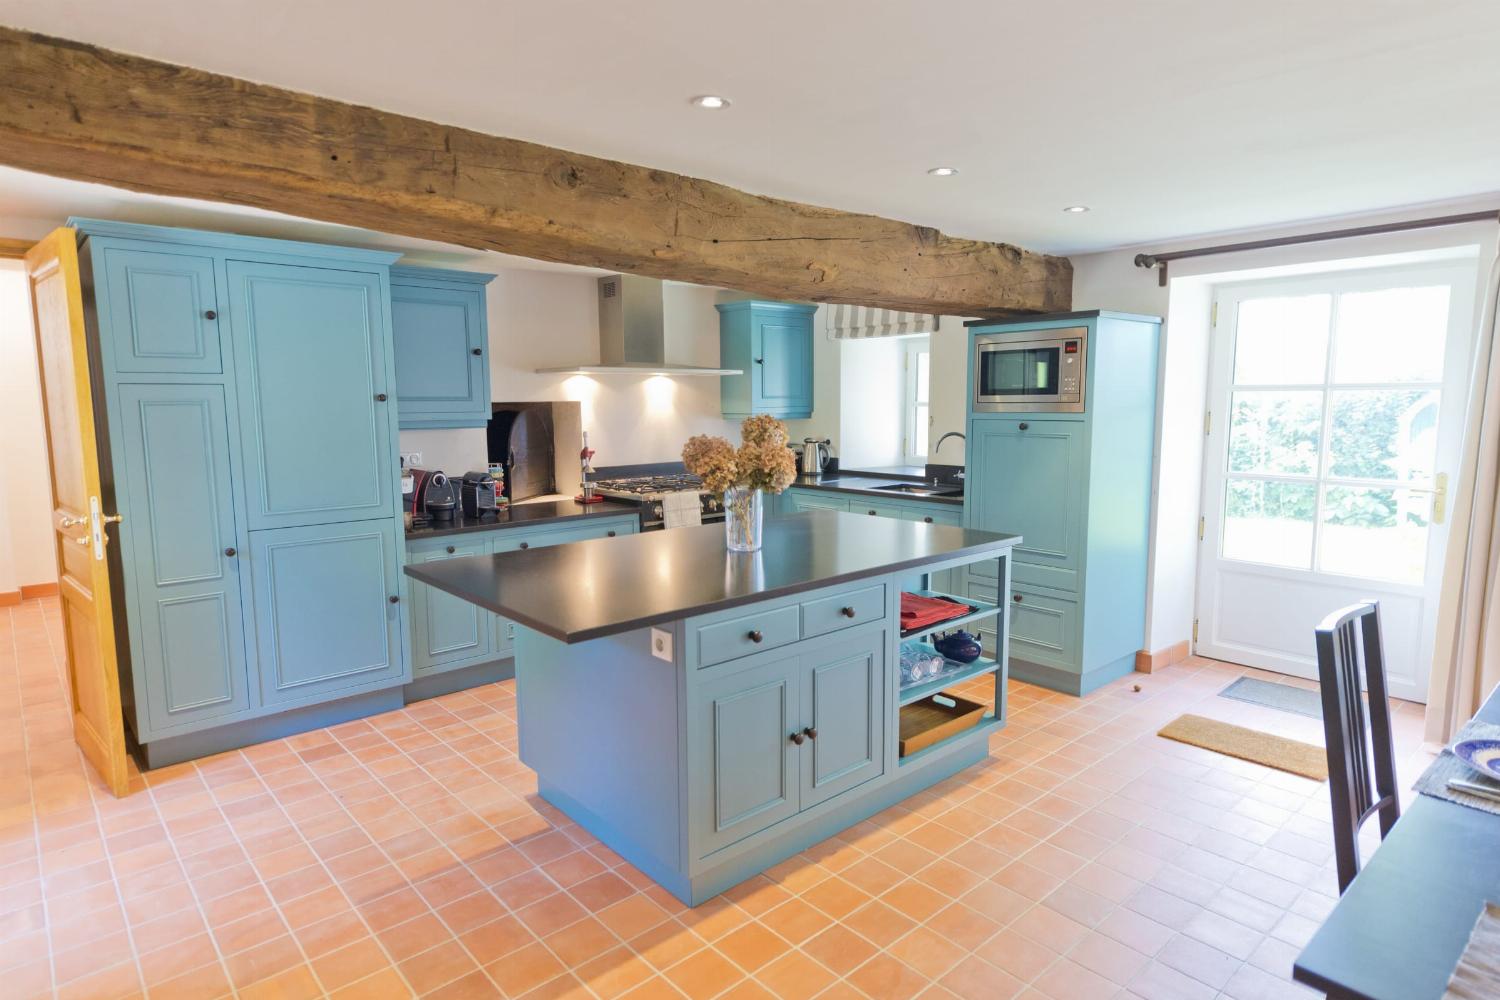 Kitchen | Rental home in Loire